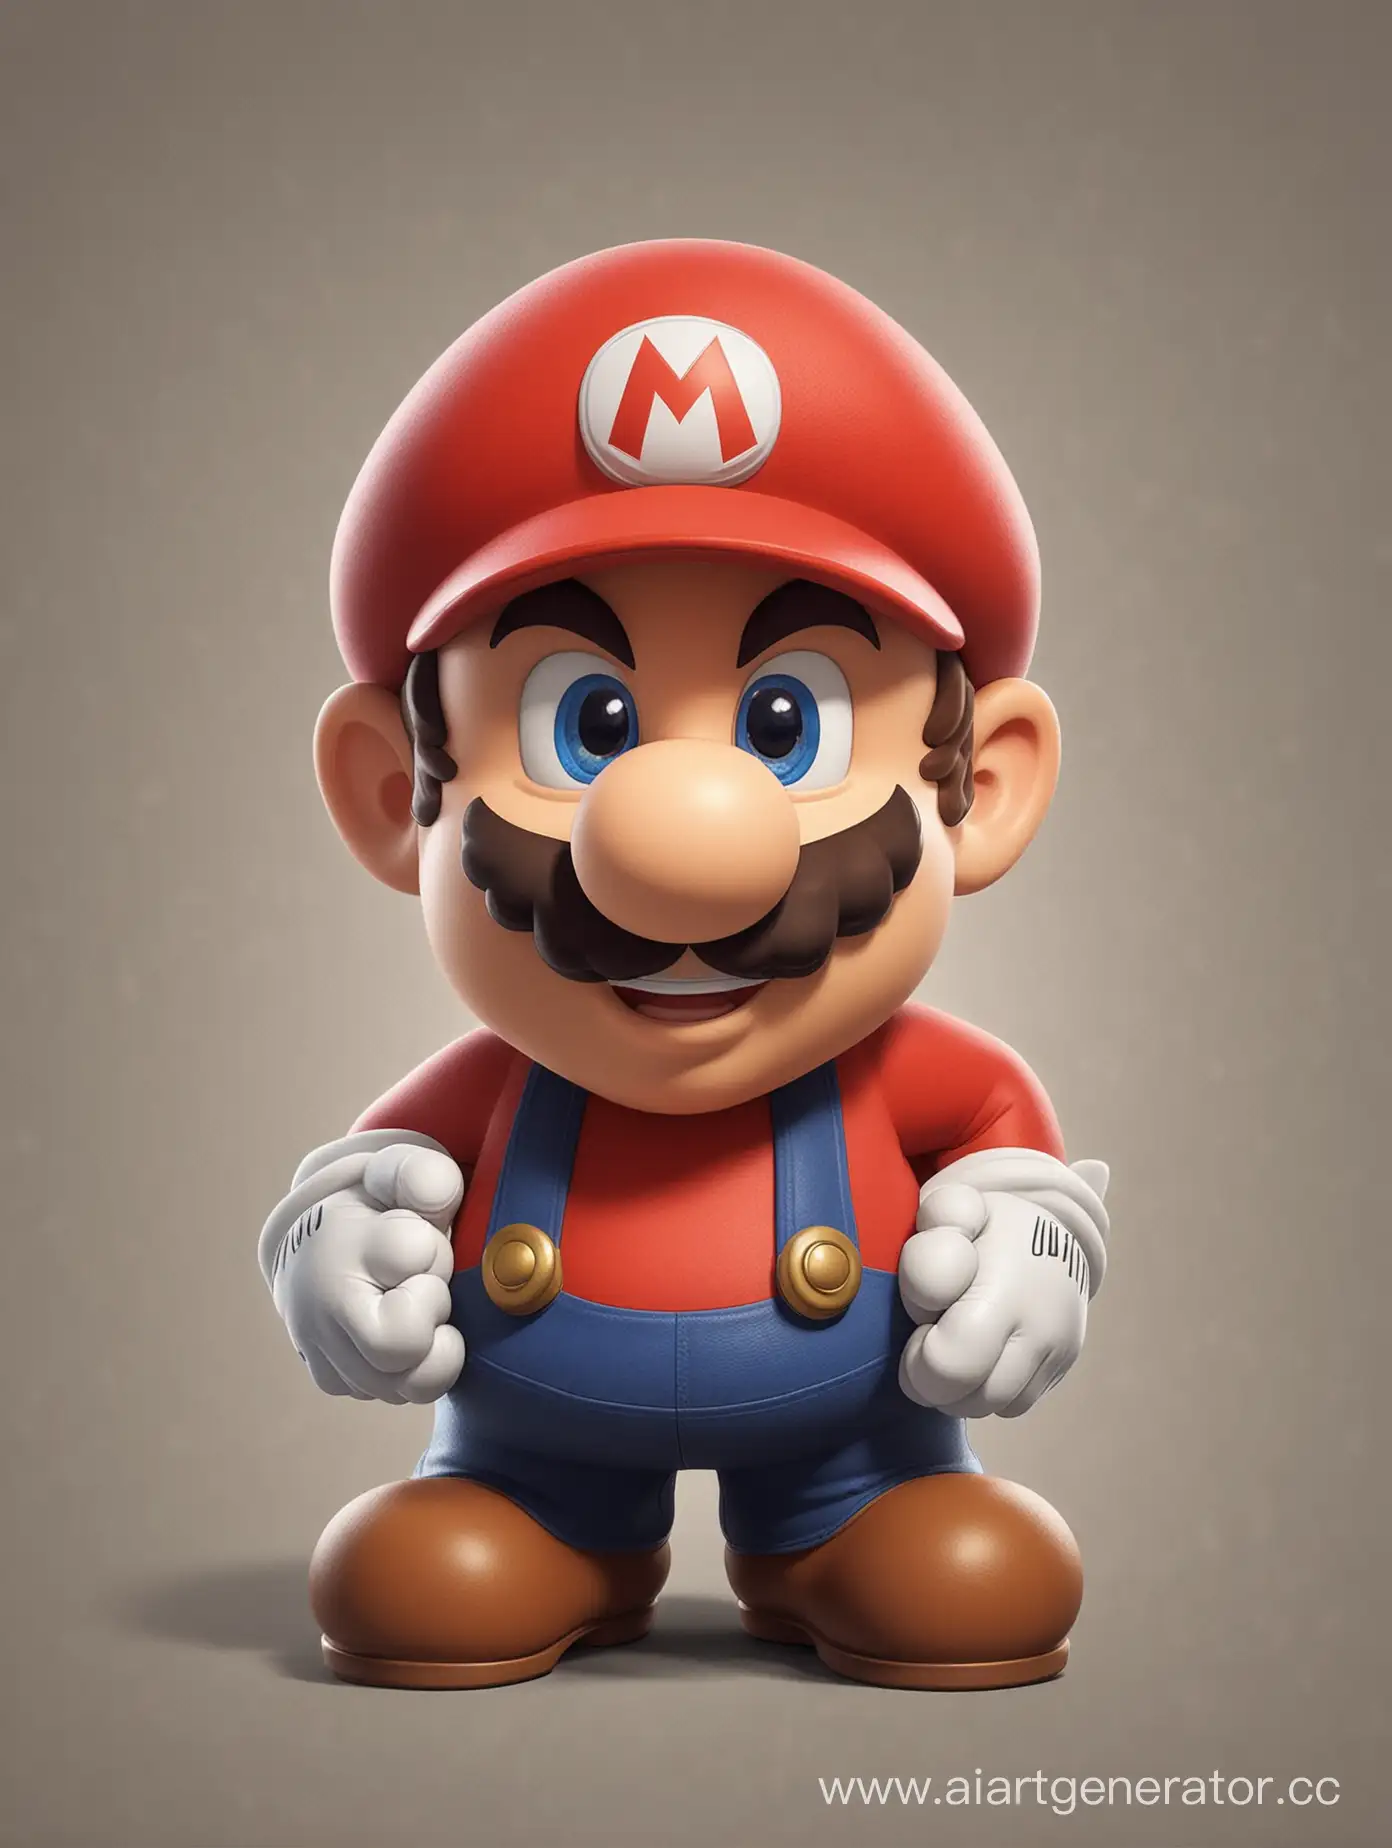 Cartoon character and fantasy Mario